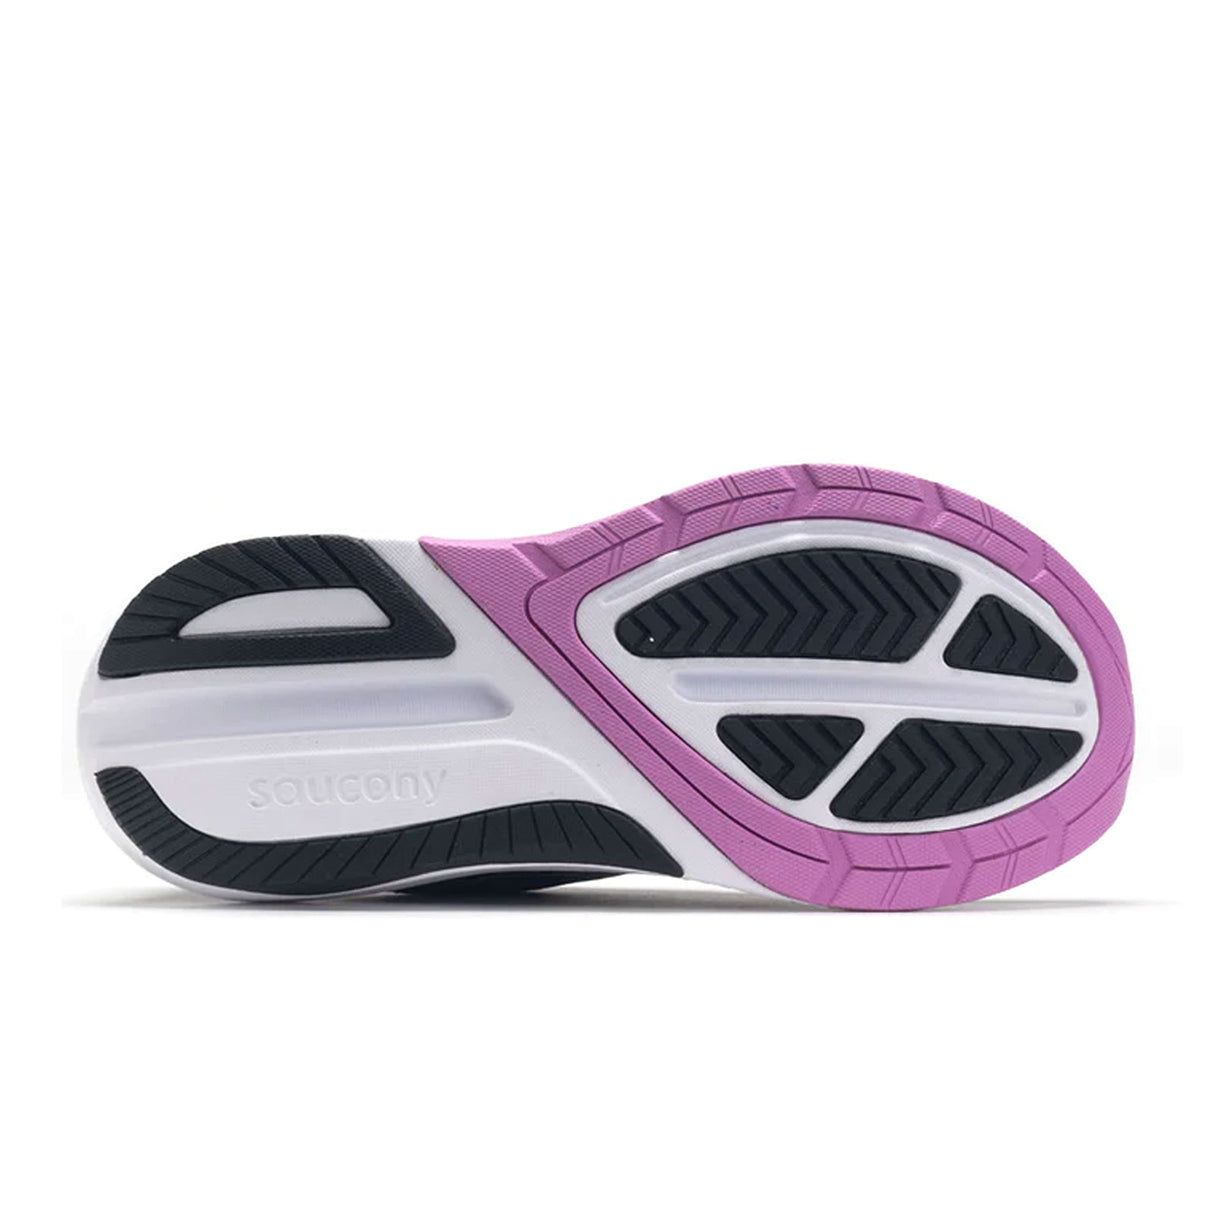 Saucony Echelon 9 Running Shoe (Women) - Indigo/Grape Athletic - Running - The Heel Shoe Fitters